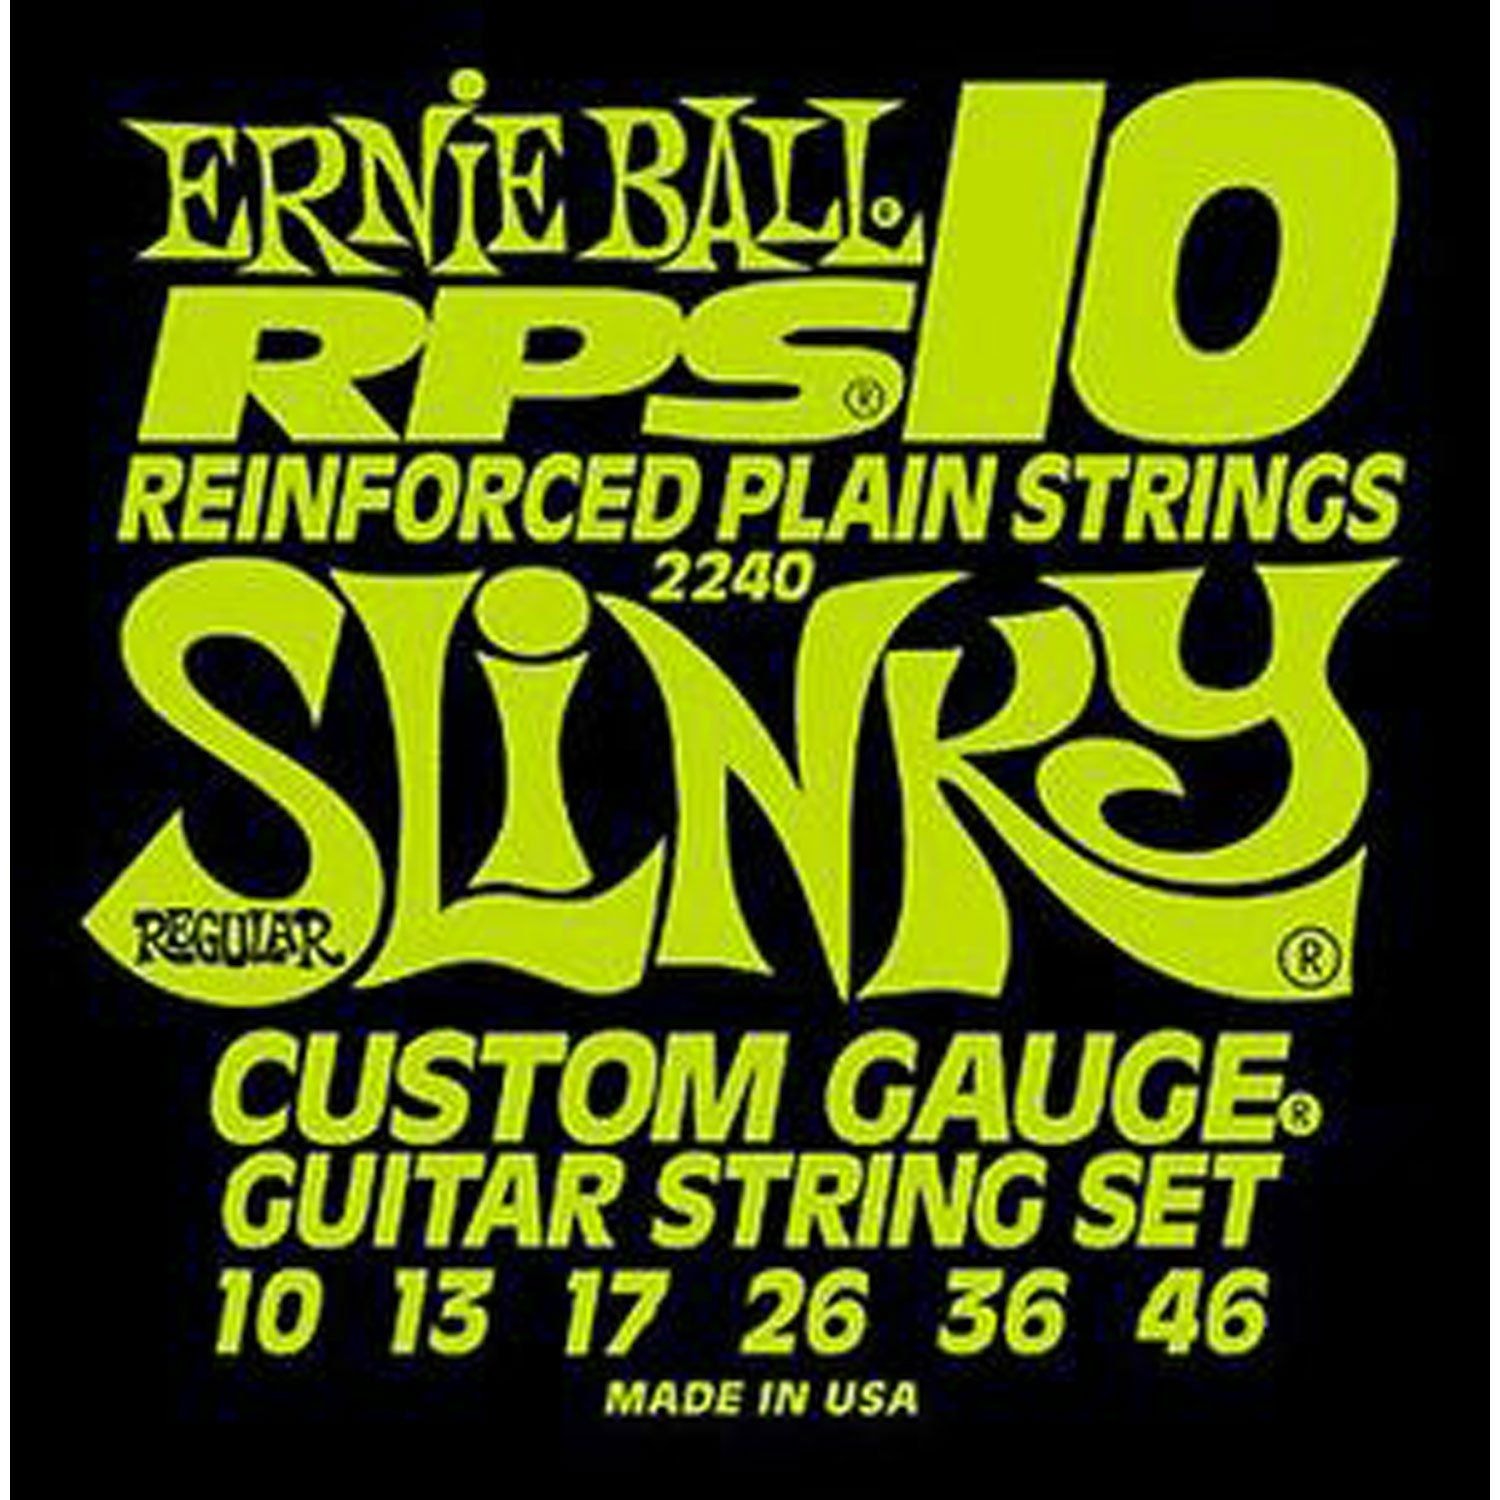 RPS струны для электрогитары ERNIE BALL 2240 (10-13-17-26-36-46) 